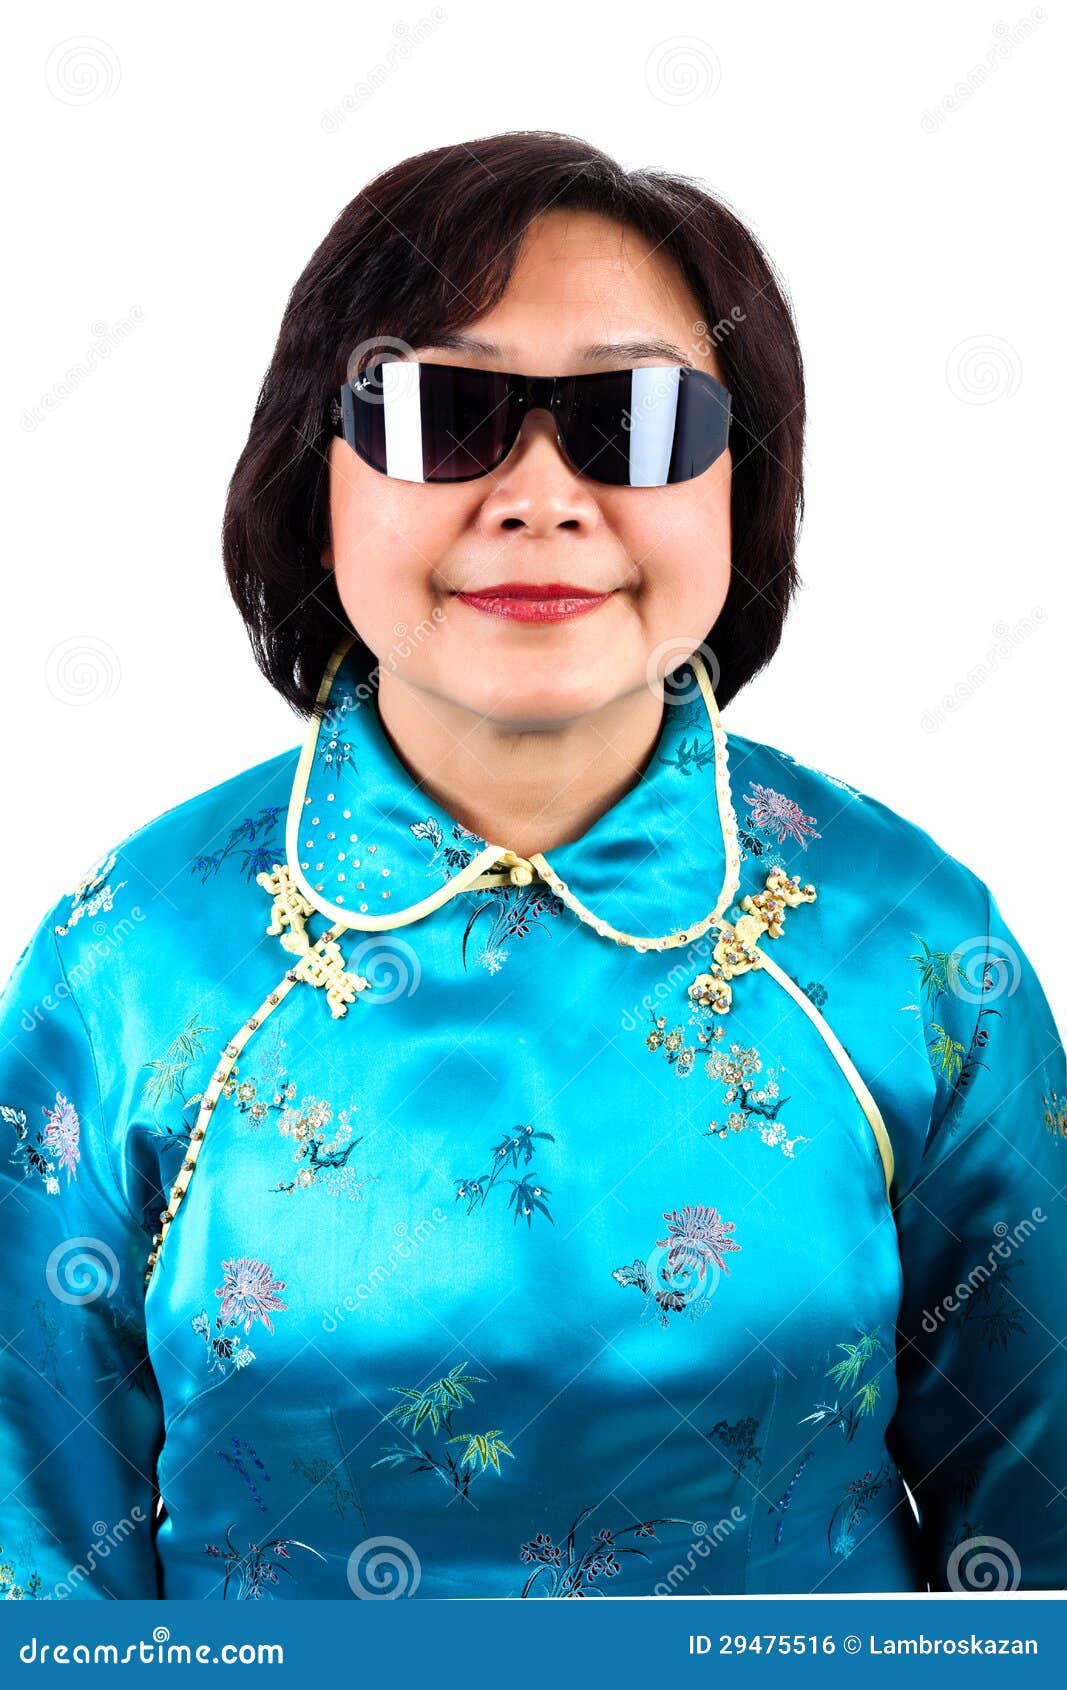 chinese-woman-portrait-wearing-sunglasses-29475516.jpg